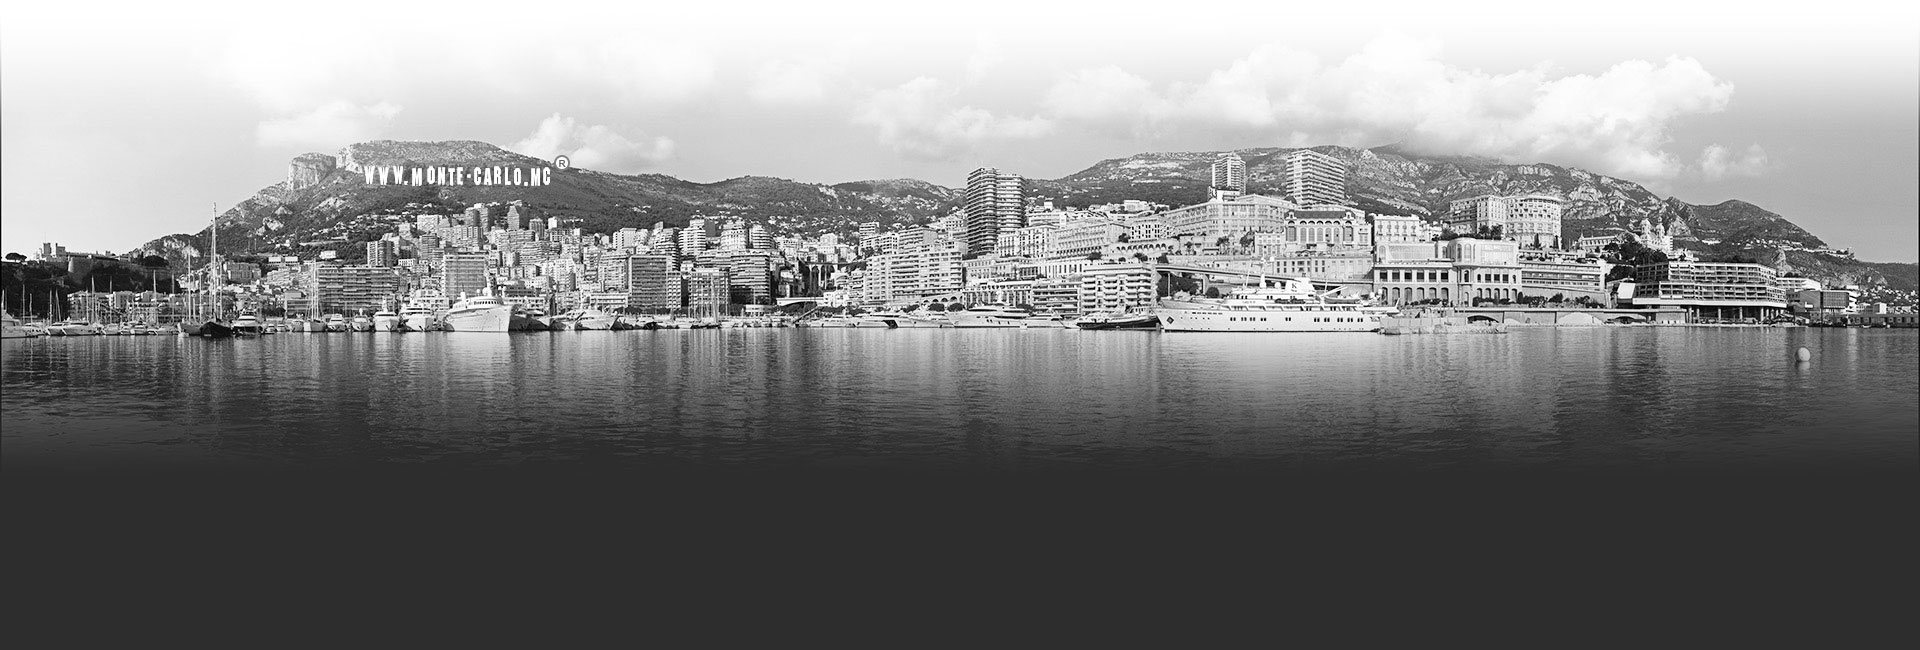 Monaco Monte-Carlo